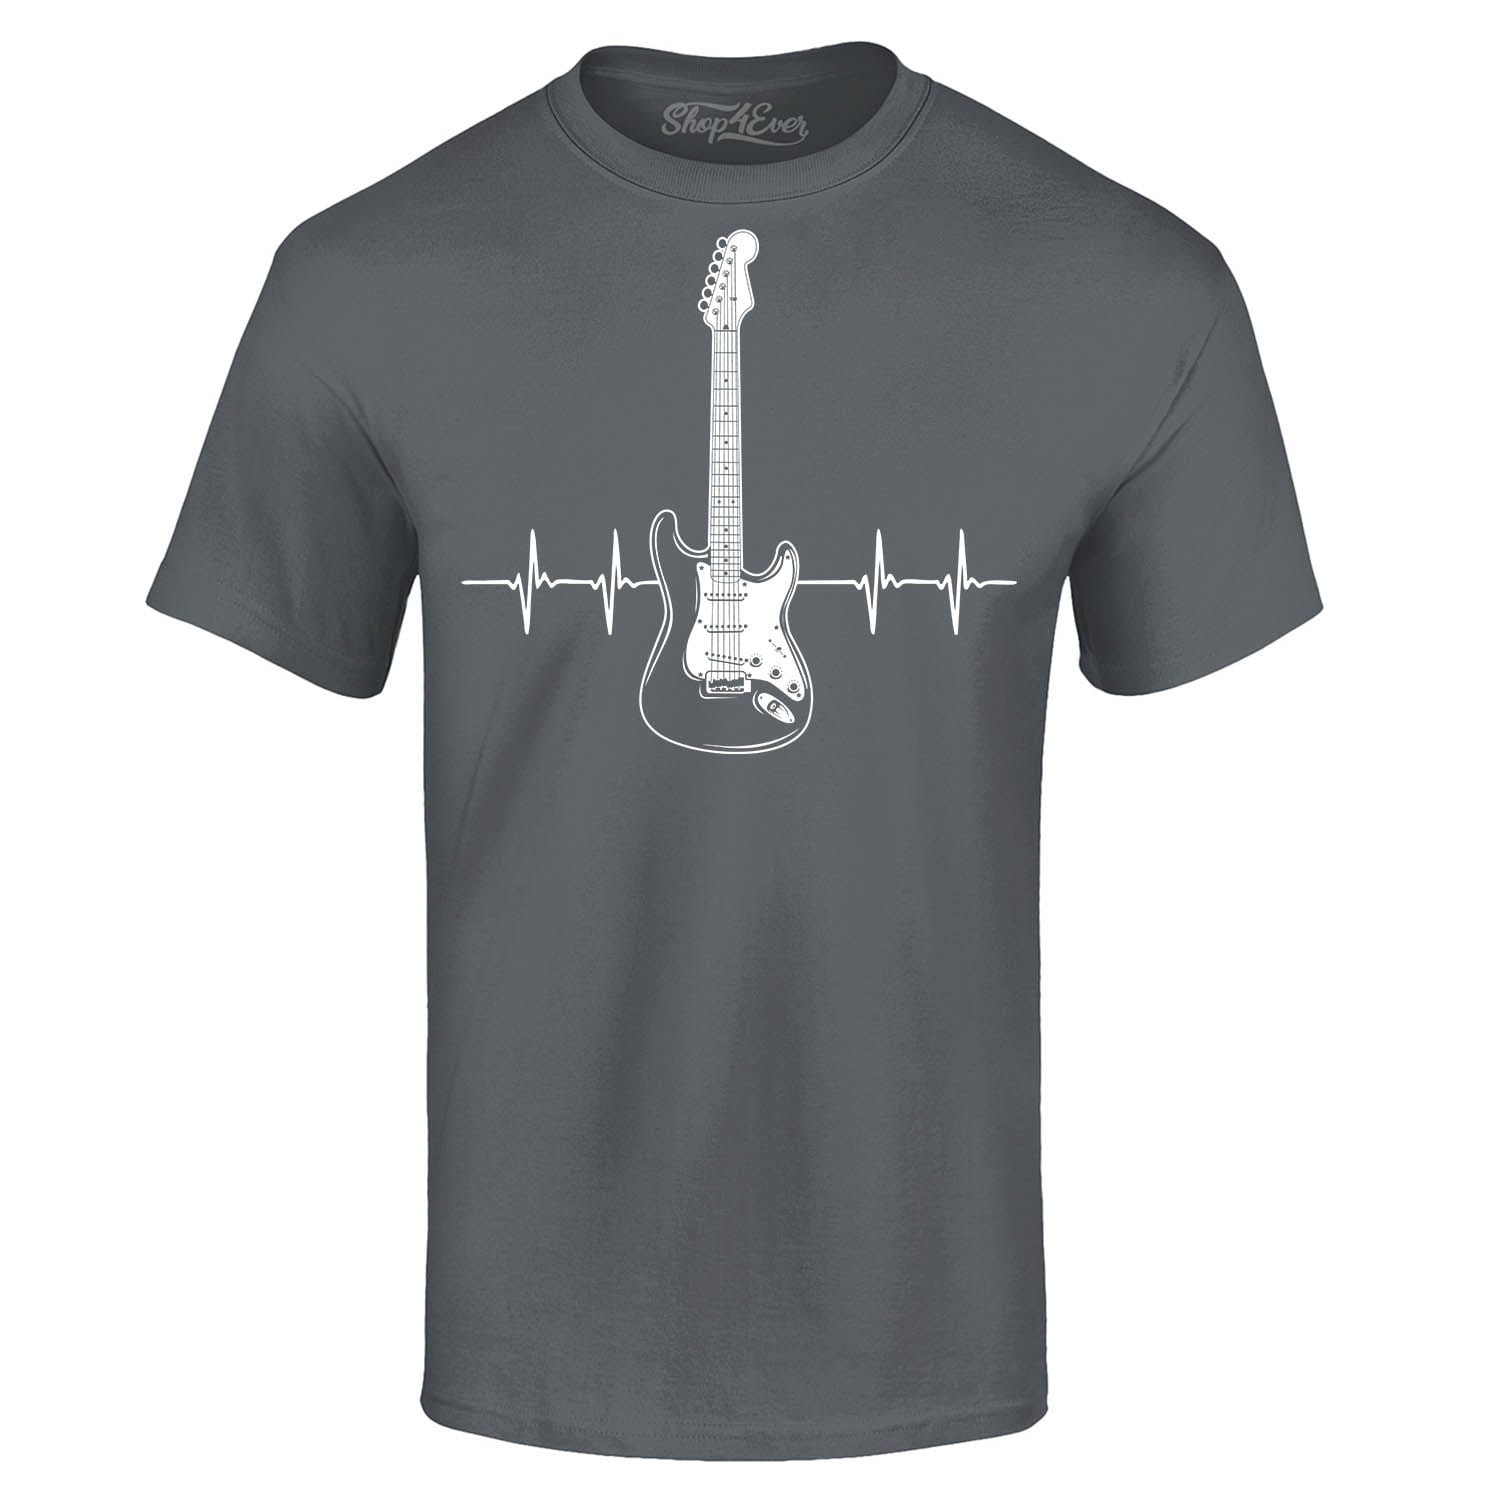 Guitar Shirt guitar graphic Shirt music T-Shirt high quality super soft Graphic T-Shirts